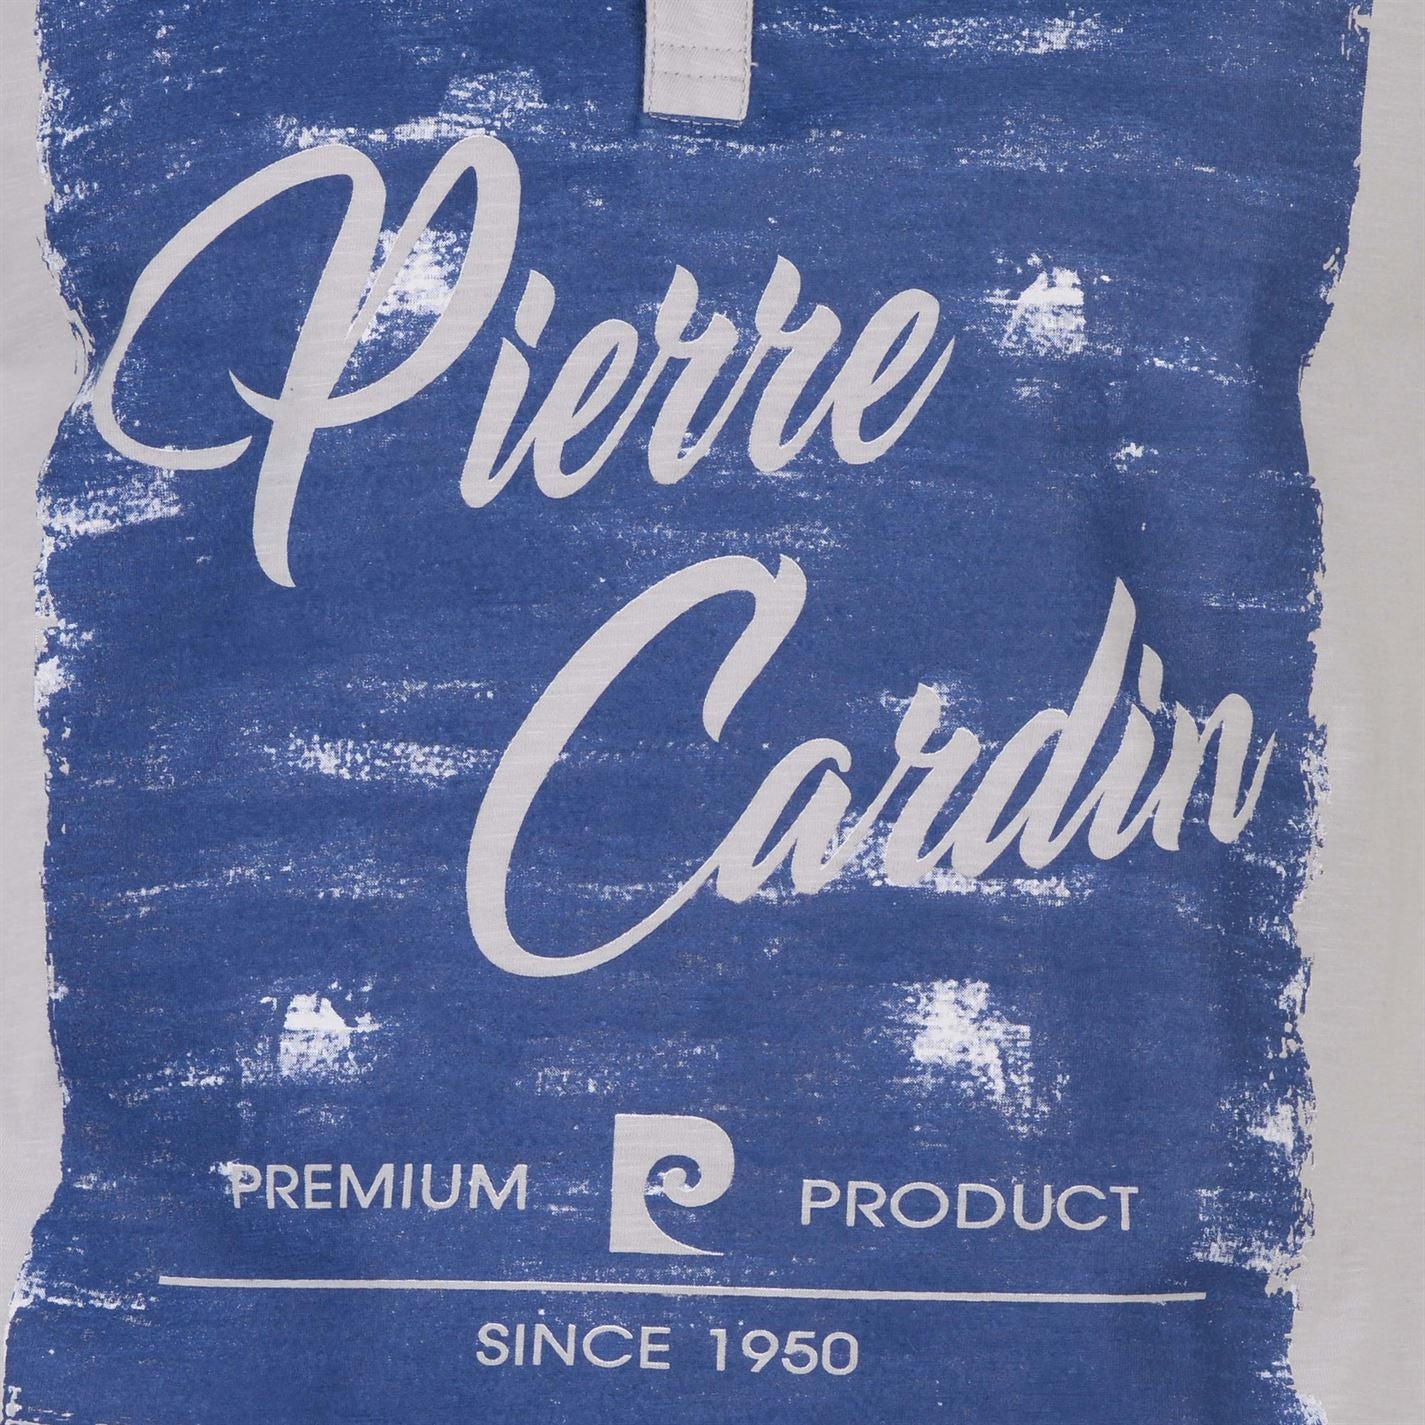 Pierre Cardin Mens Print Y Neck T Shirt V Tee Top Short Sleeve Cotton